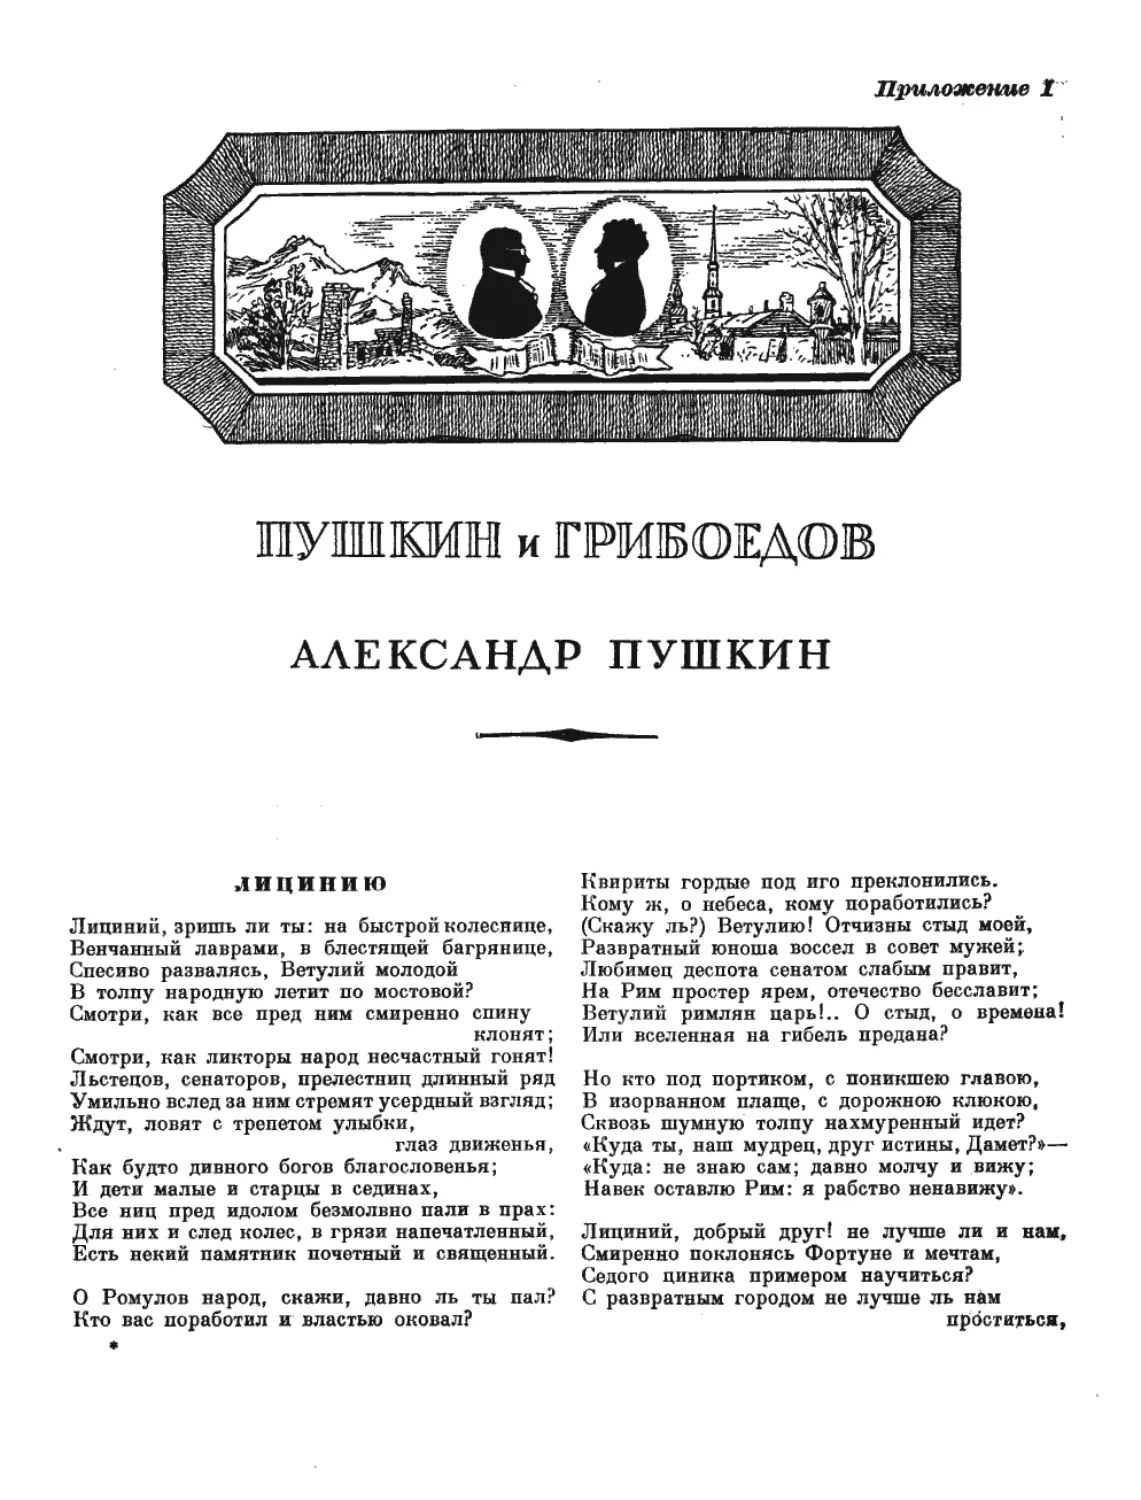 Приложение I. Пушкин и Грибоедов
Александр Пушкин